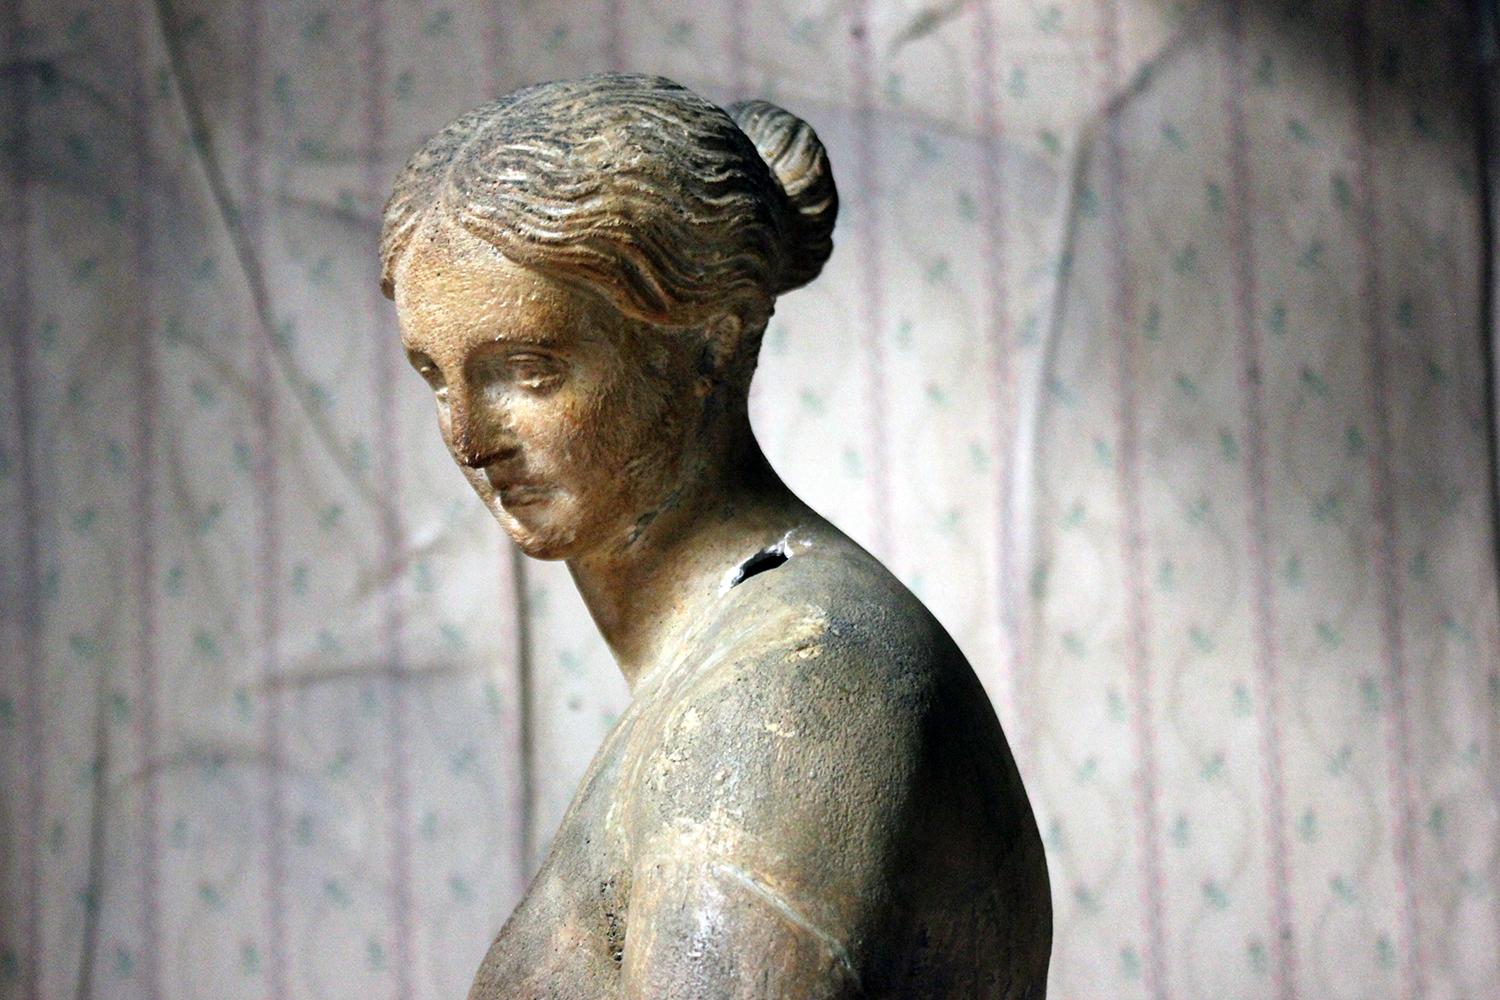 Classical Roman Mid-19th Century Plaster Figure ‘The Greek Slave’ after Hiram Powers, c.1844-70